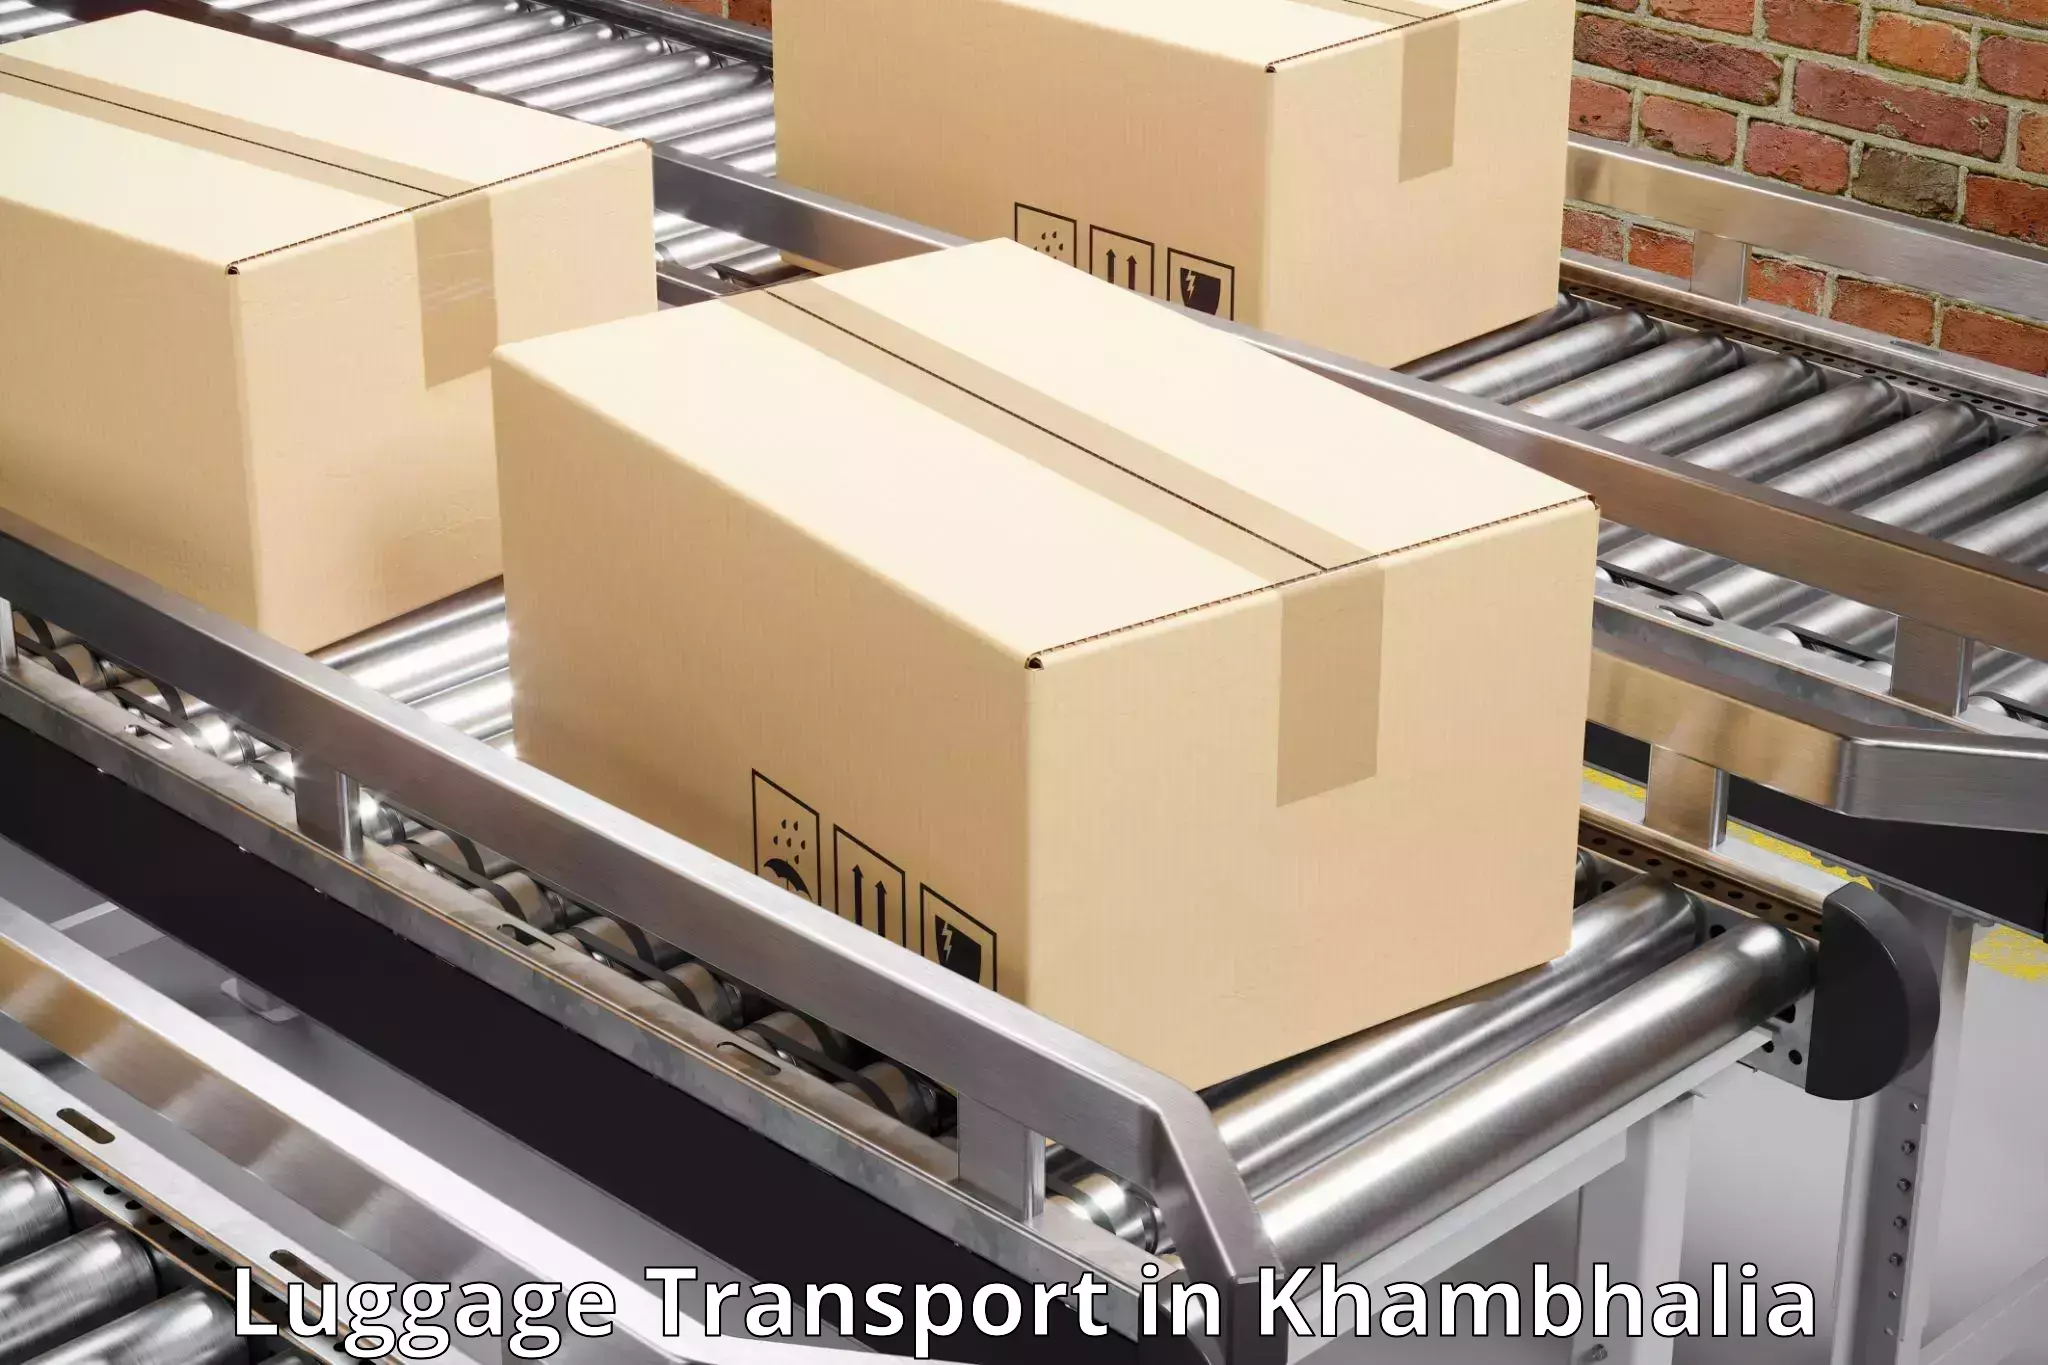 Luggage delivery operations in Khambhalia